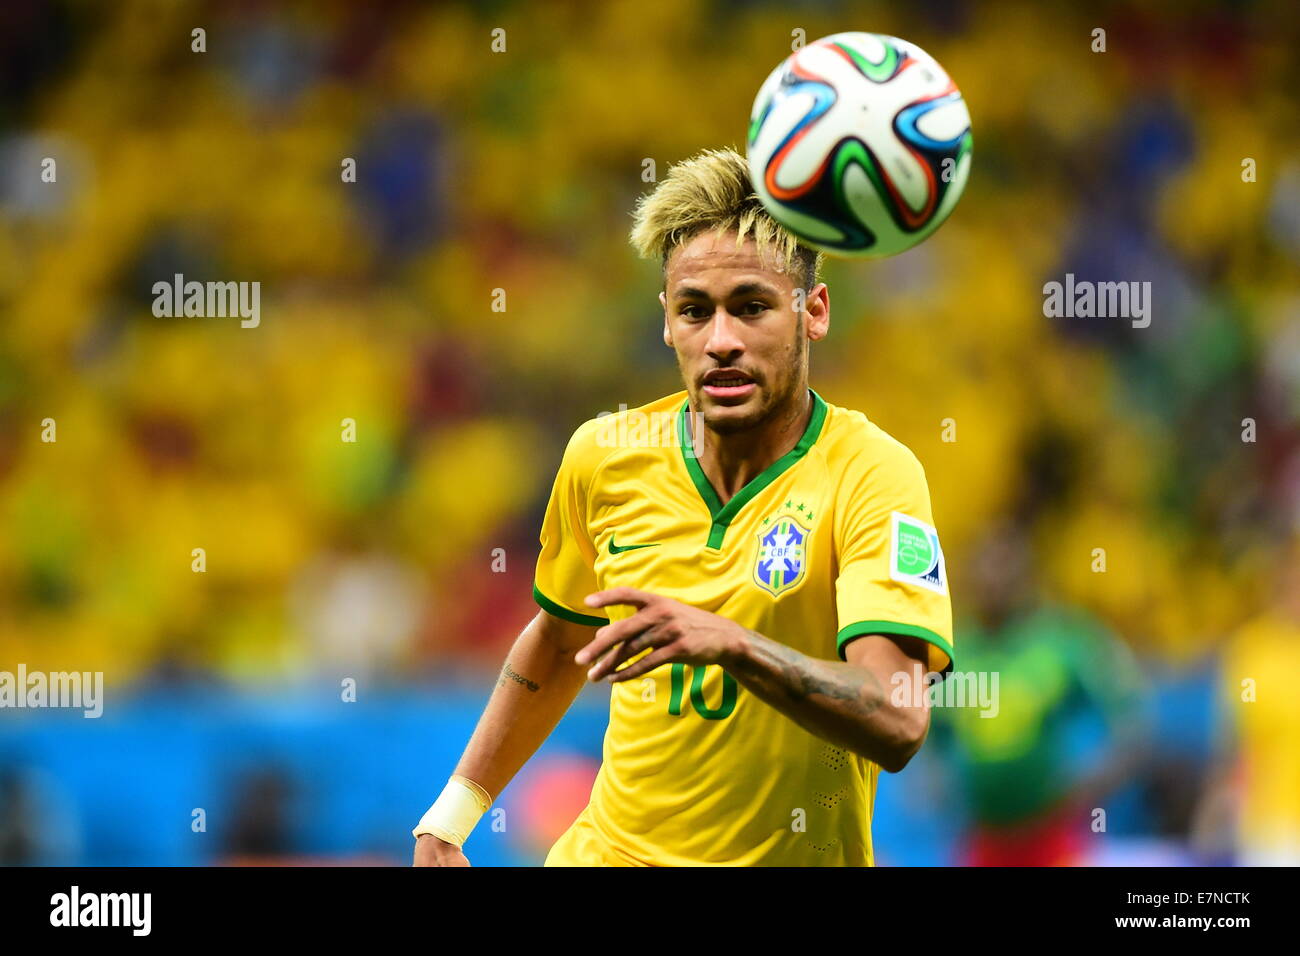 Neymar. Brazil v Cameroon, group match. FIFA World Cup Brazil 2014. National stadium, Brasilia. 23 June 2014 Stock Photo